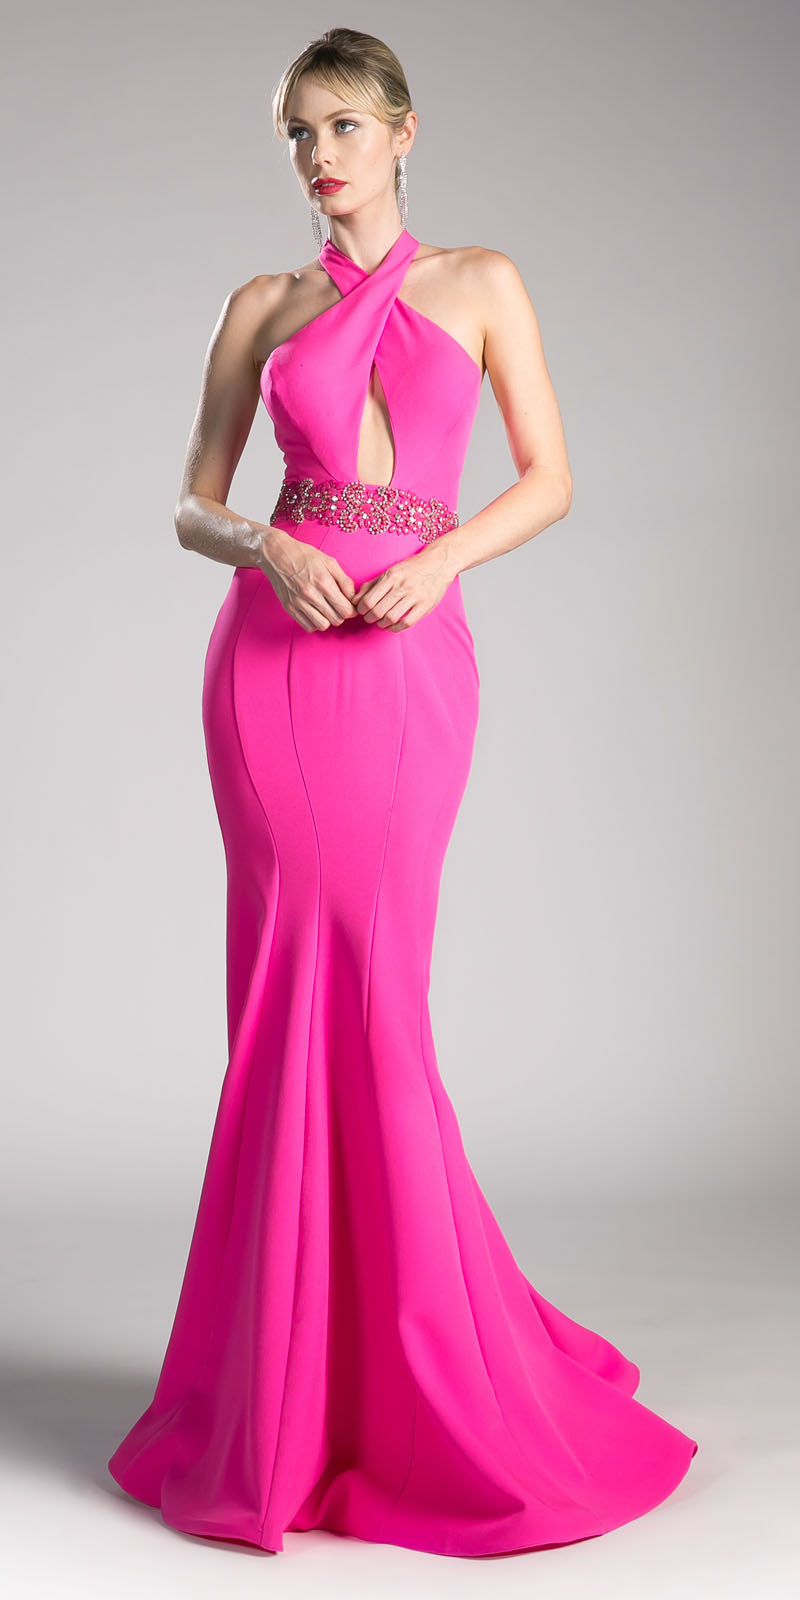 Cinderella Divine 11978 Hot Pink Halter Mermaid Long Prom Dress With Keyhole Discountdressshop 2272